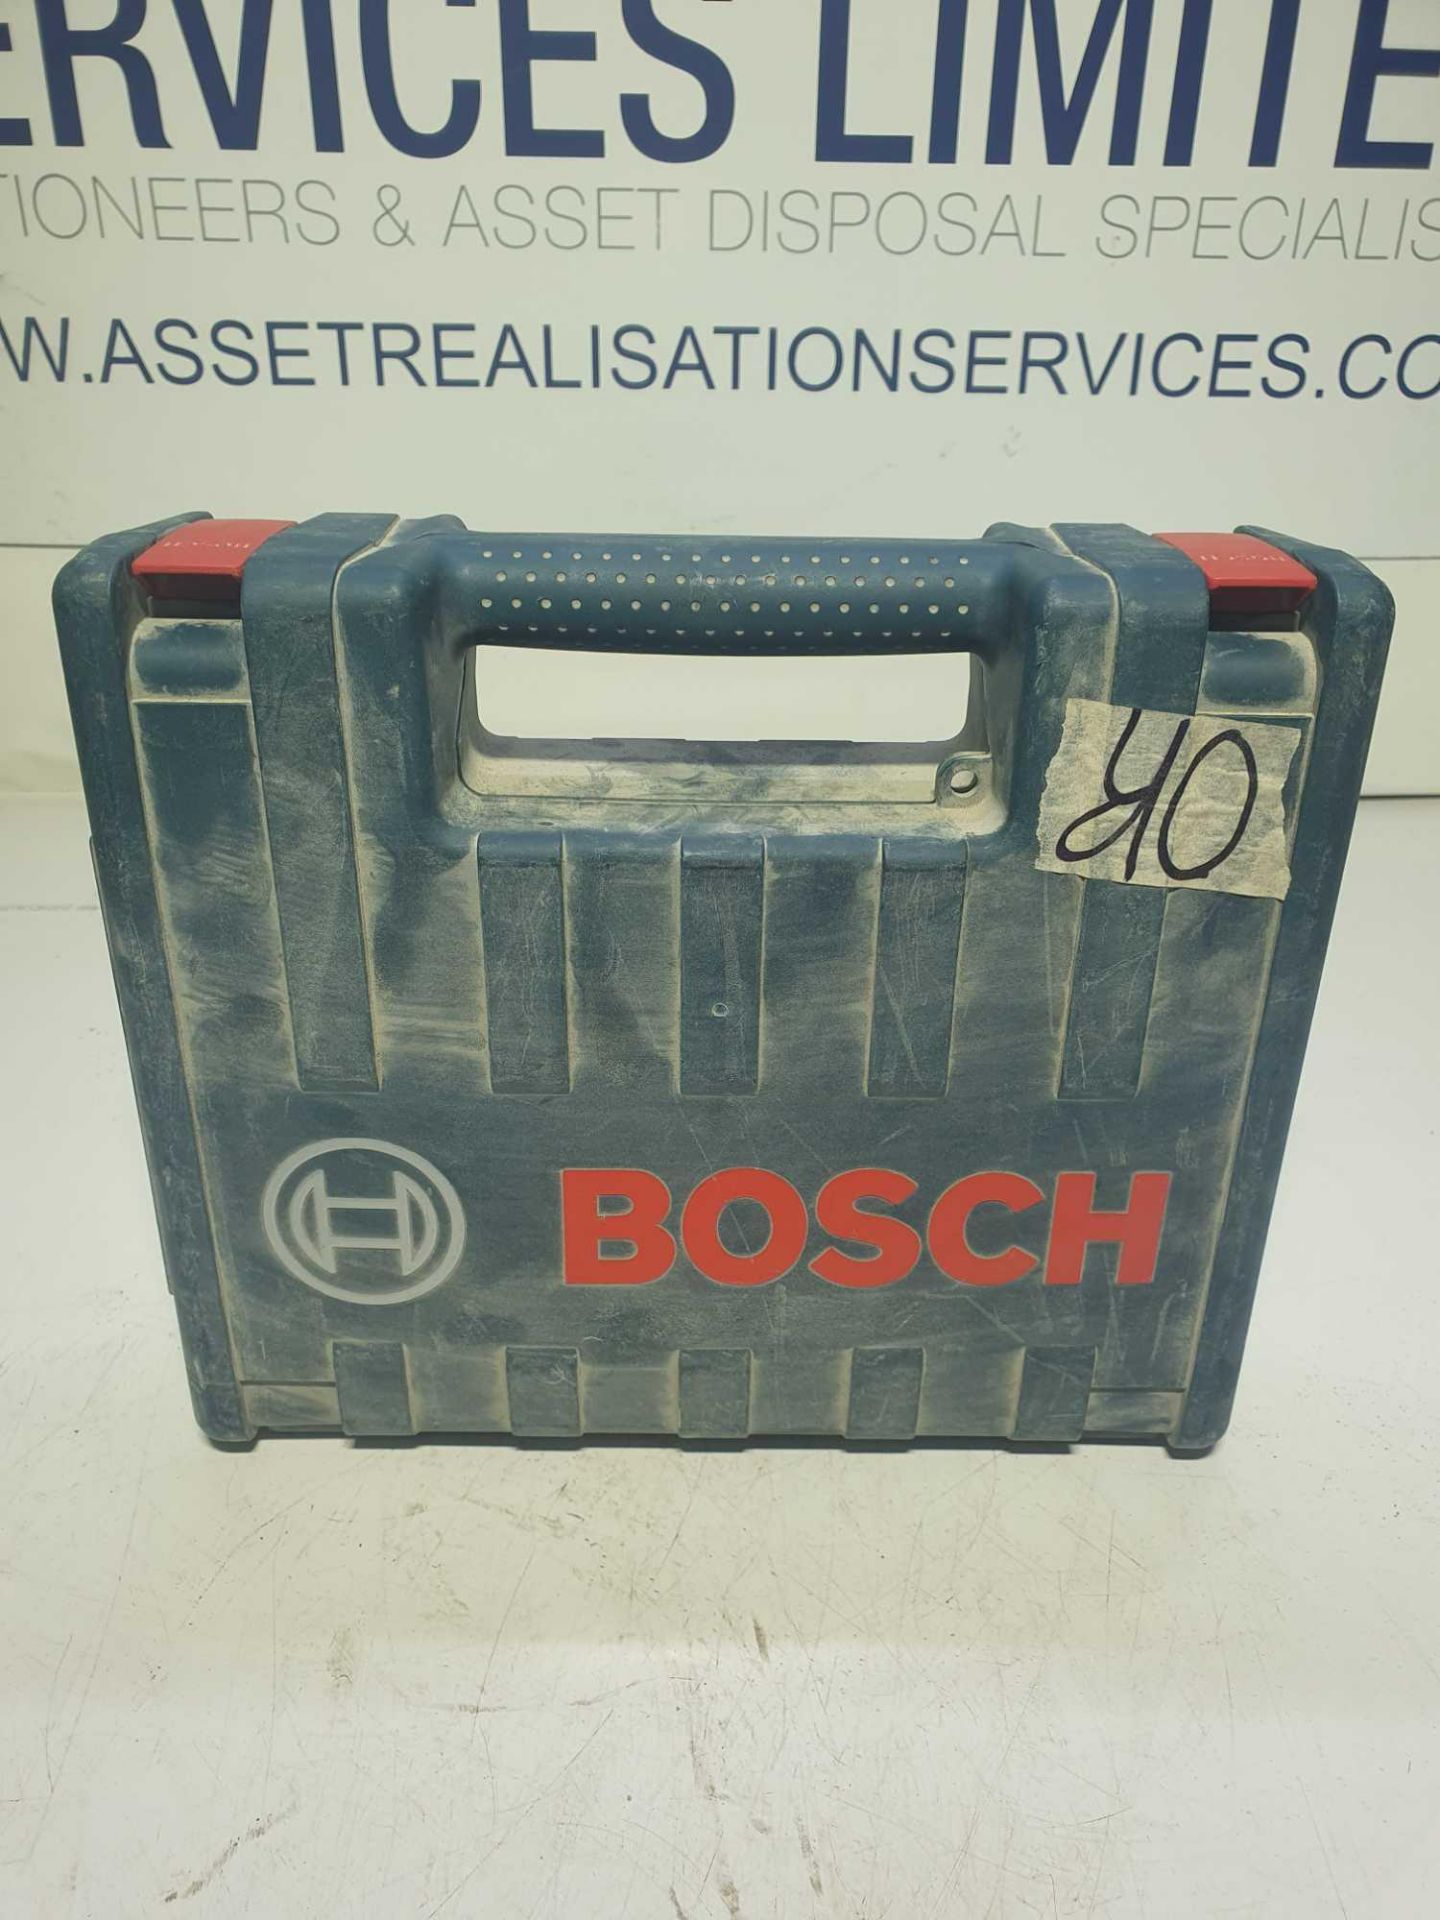 Bosch 110v drywall screwdriver